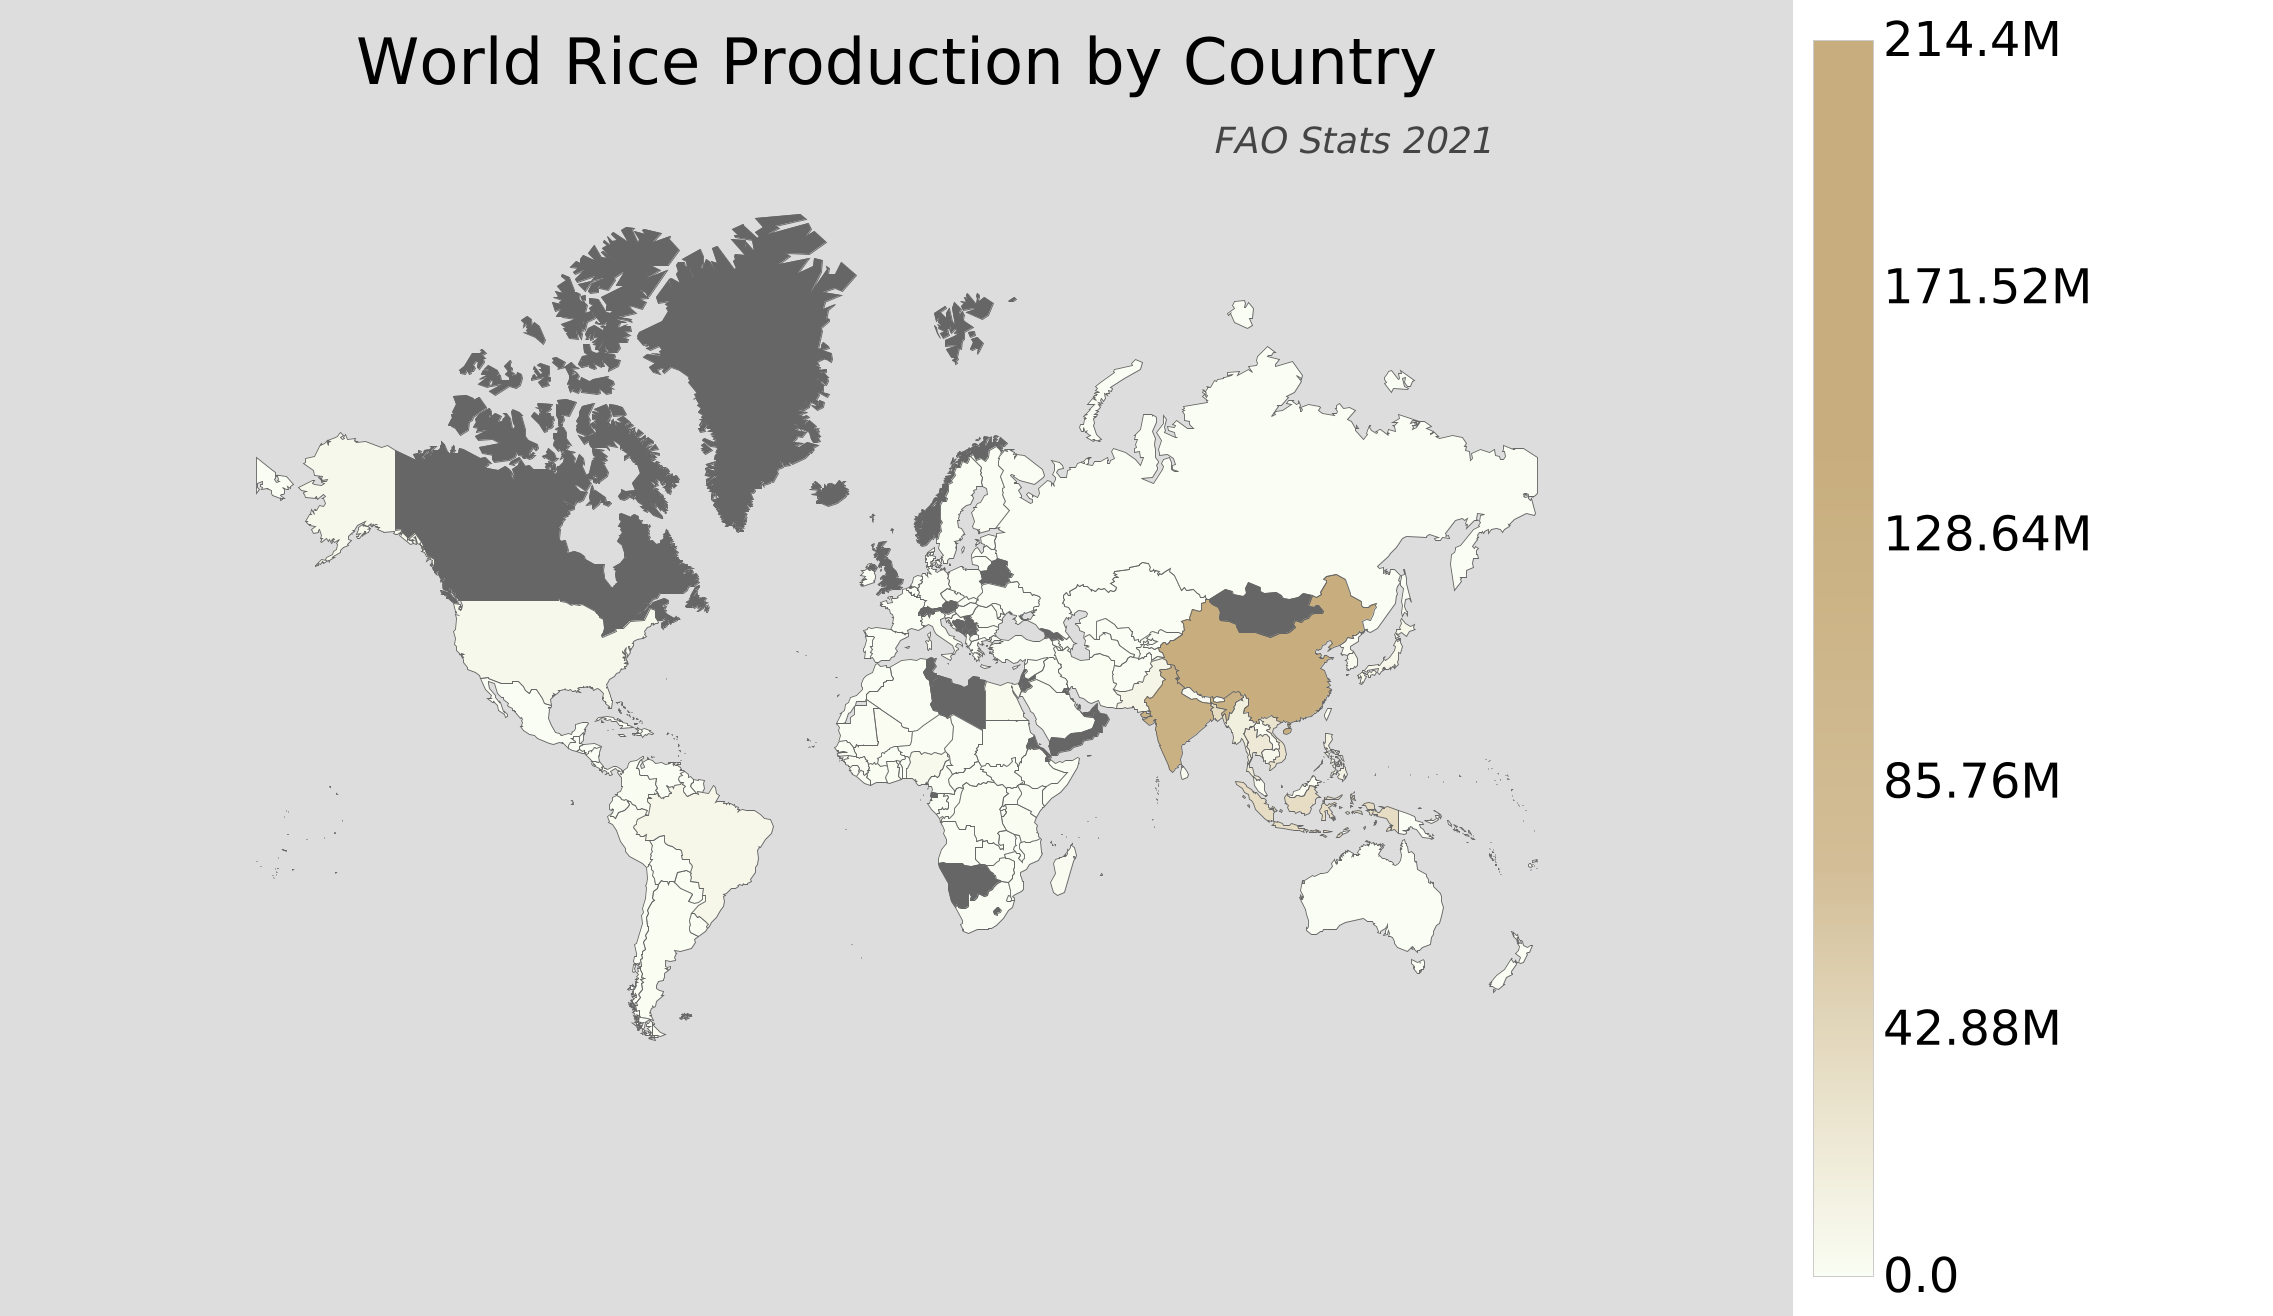 highest exporter of rice in world